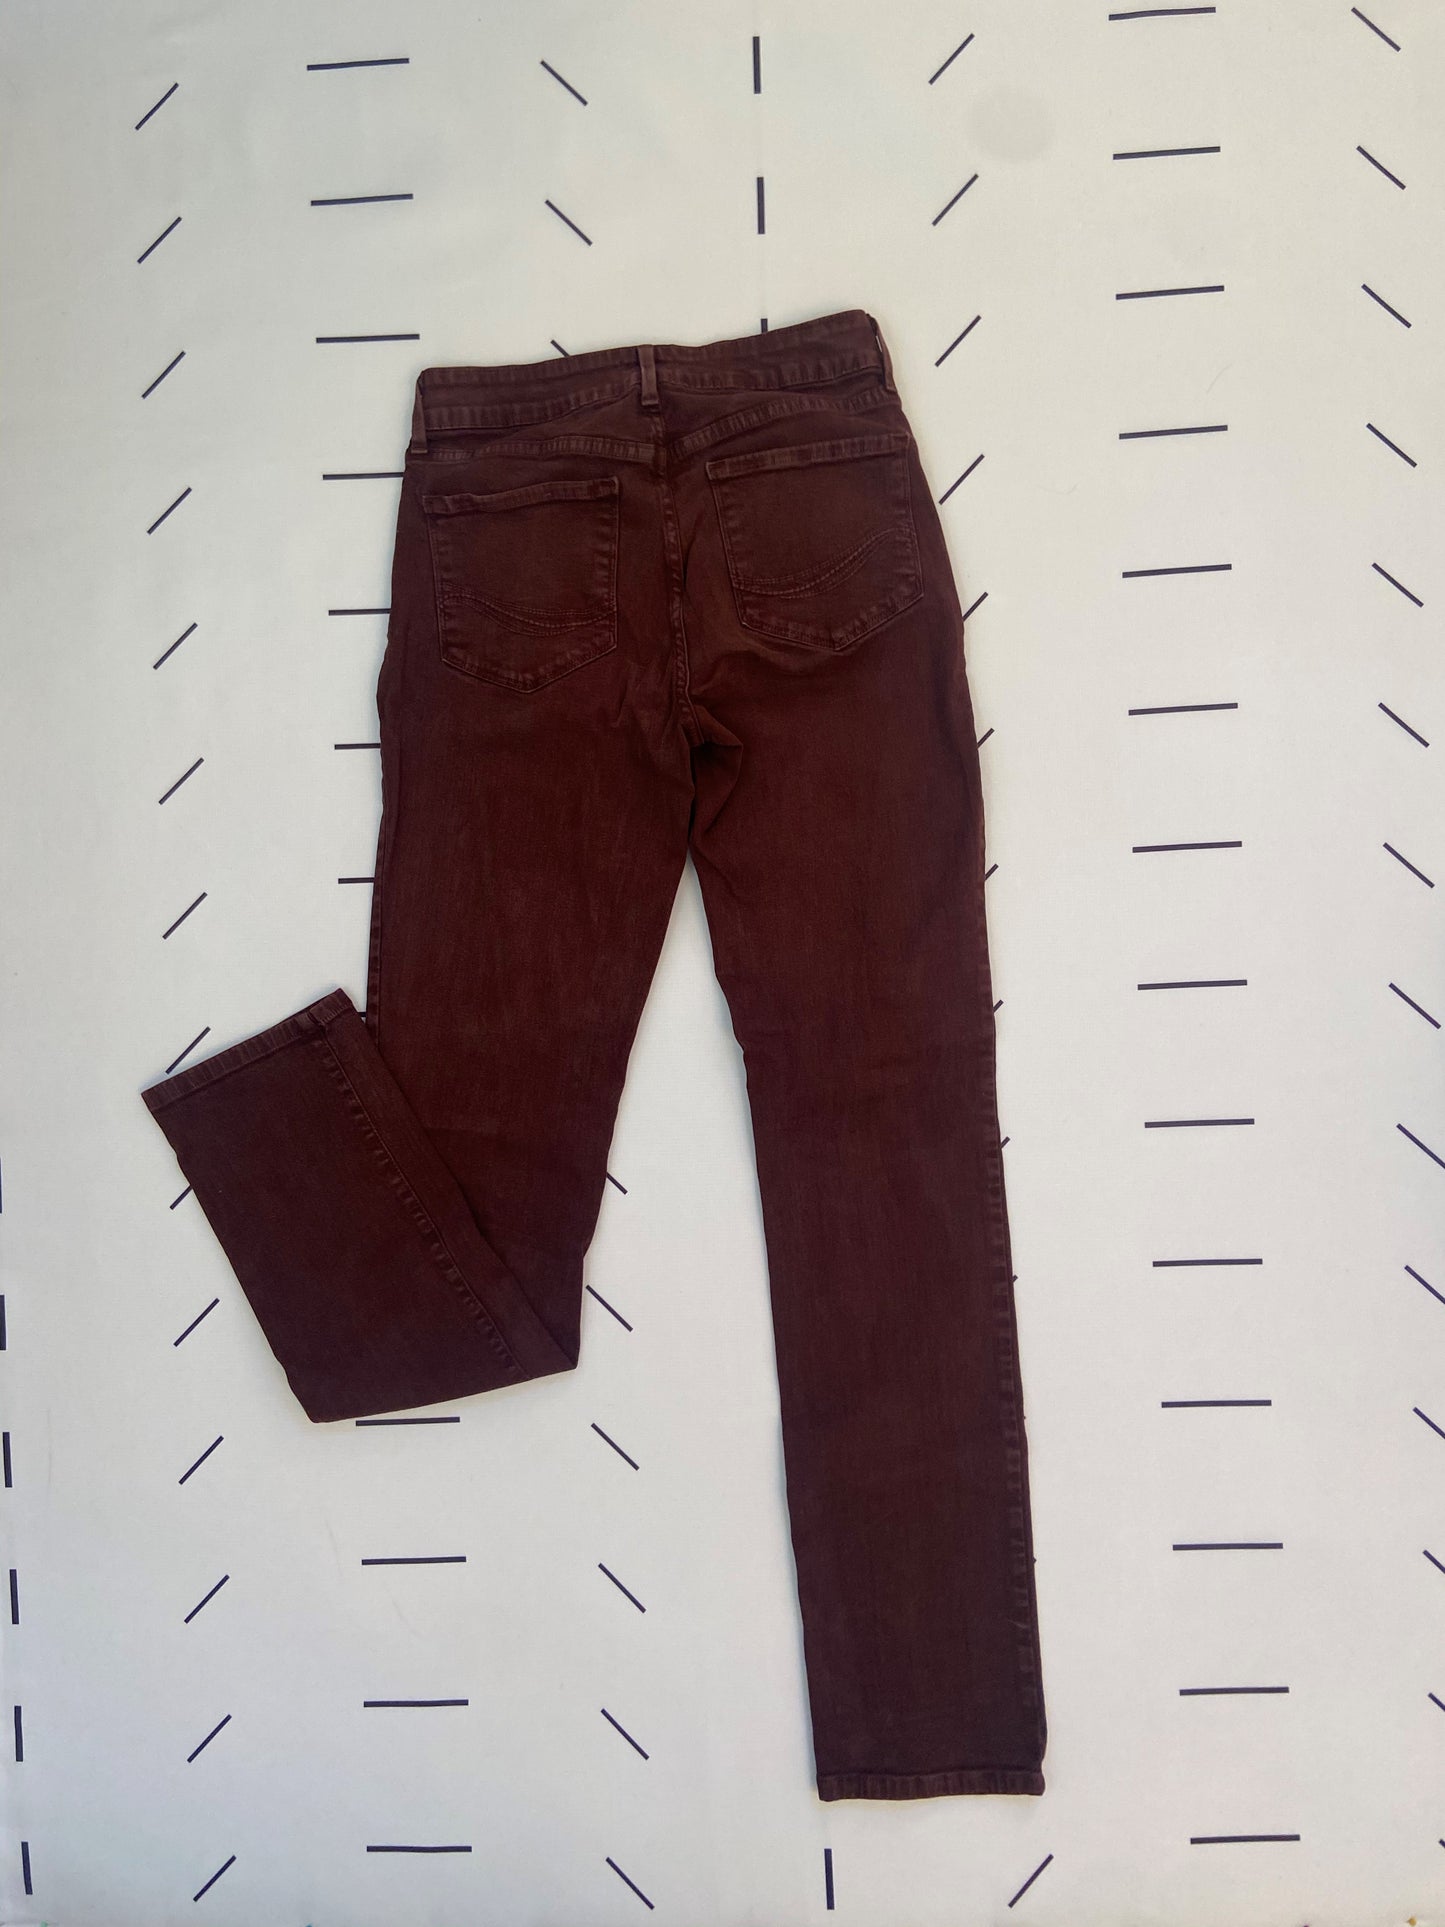 Brown Straight Leg Slim Fit Jeans - S (4)